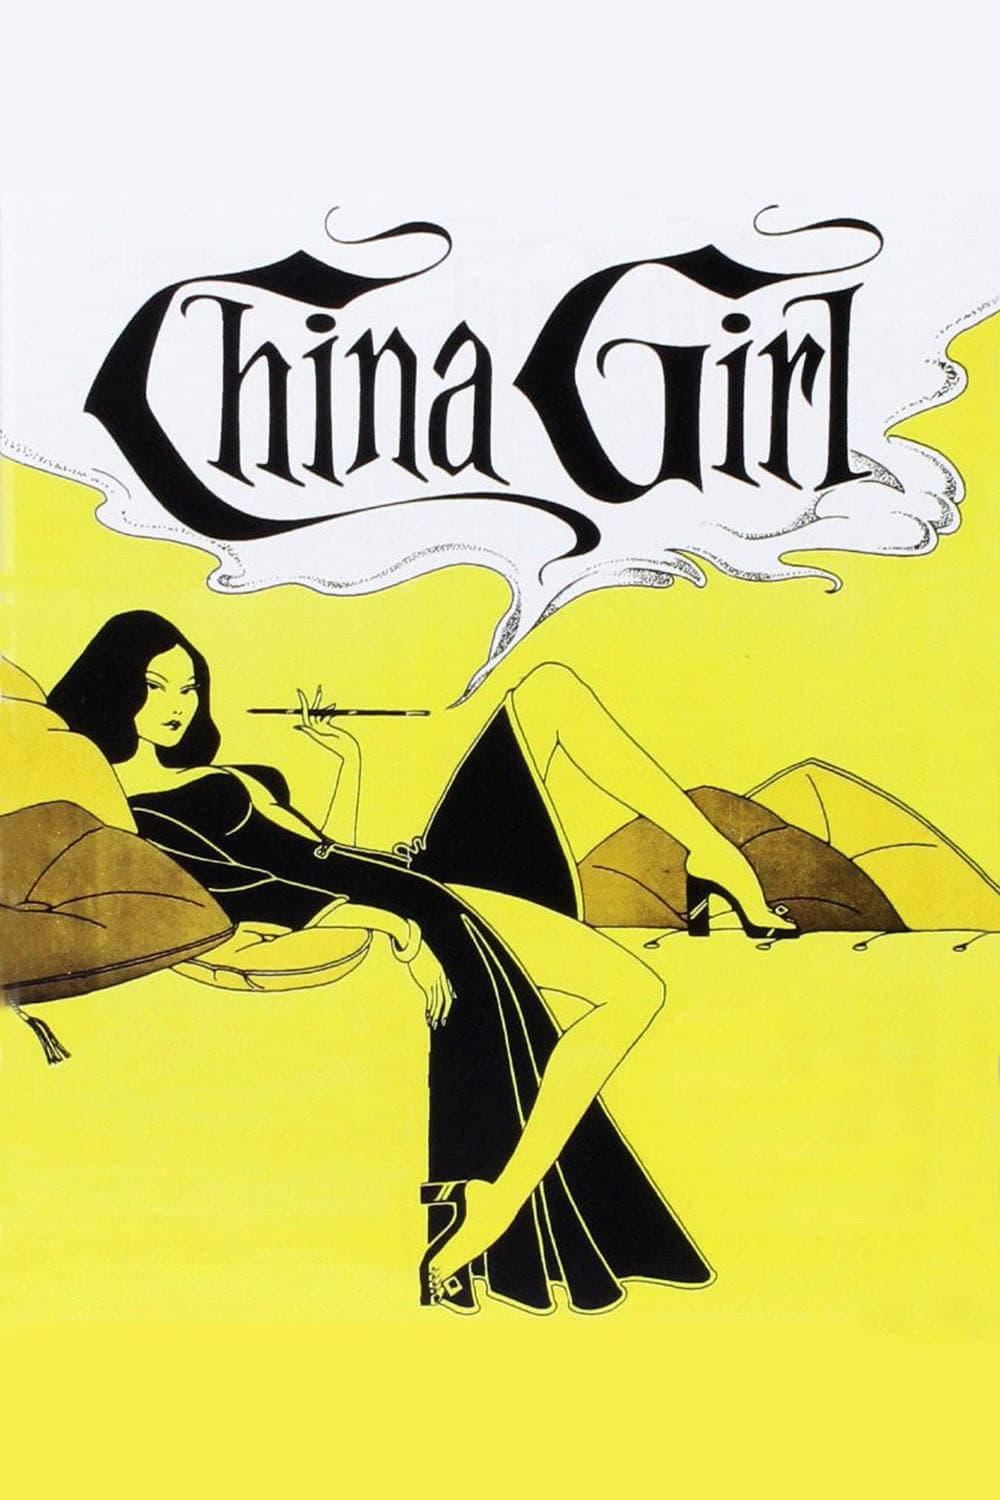 China Girl poster